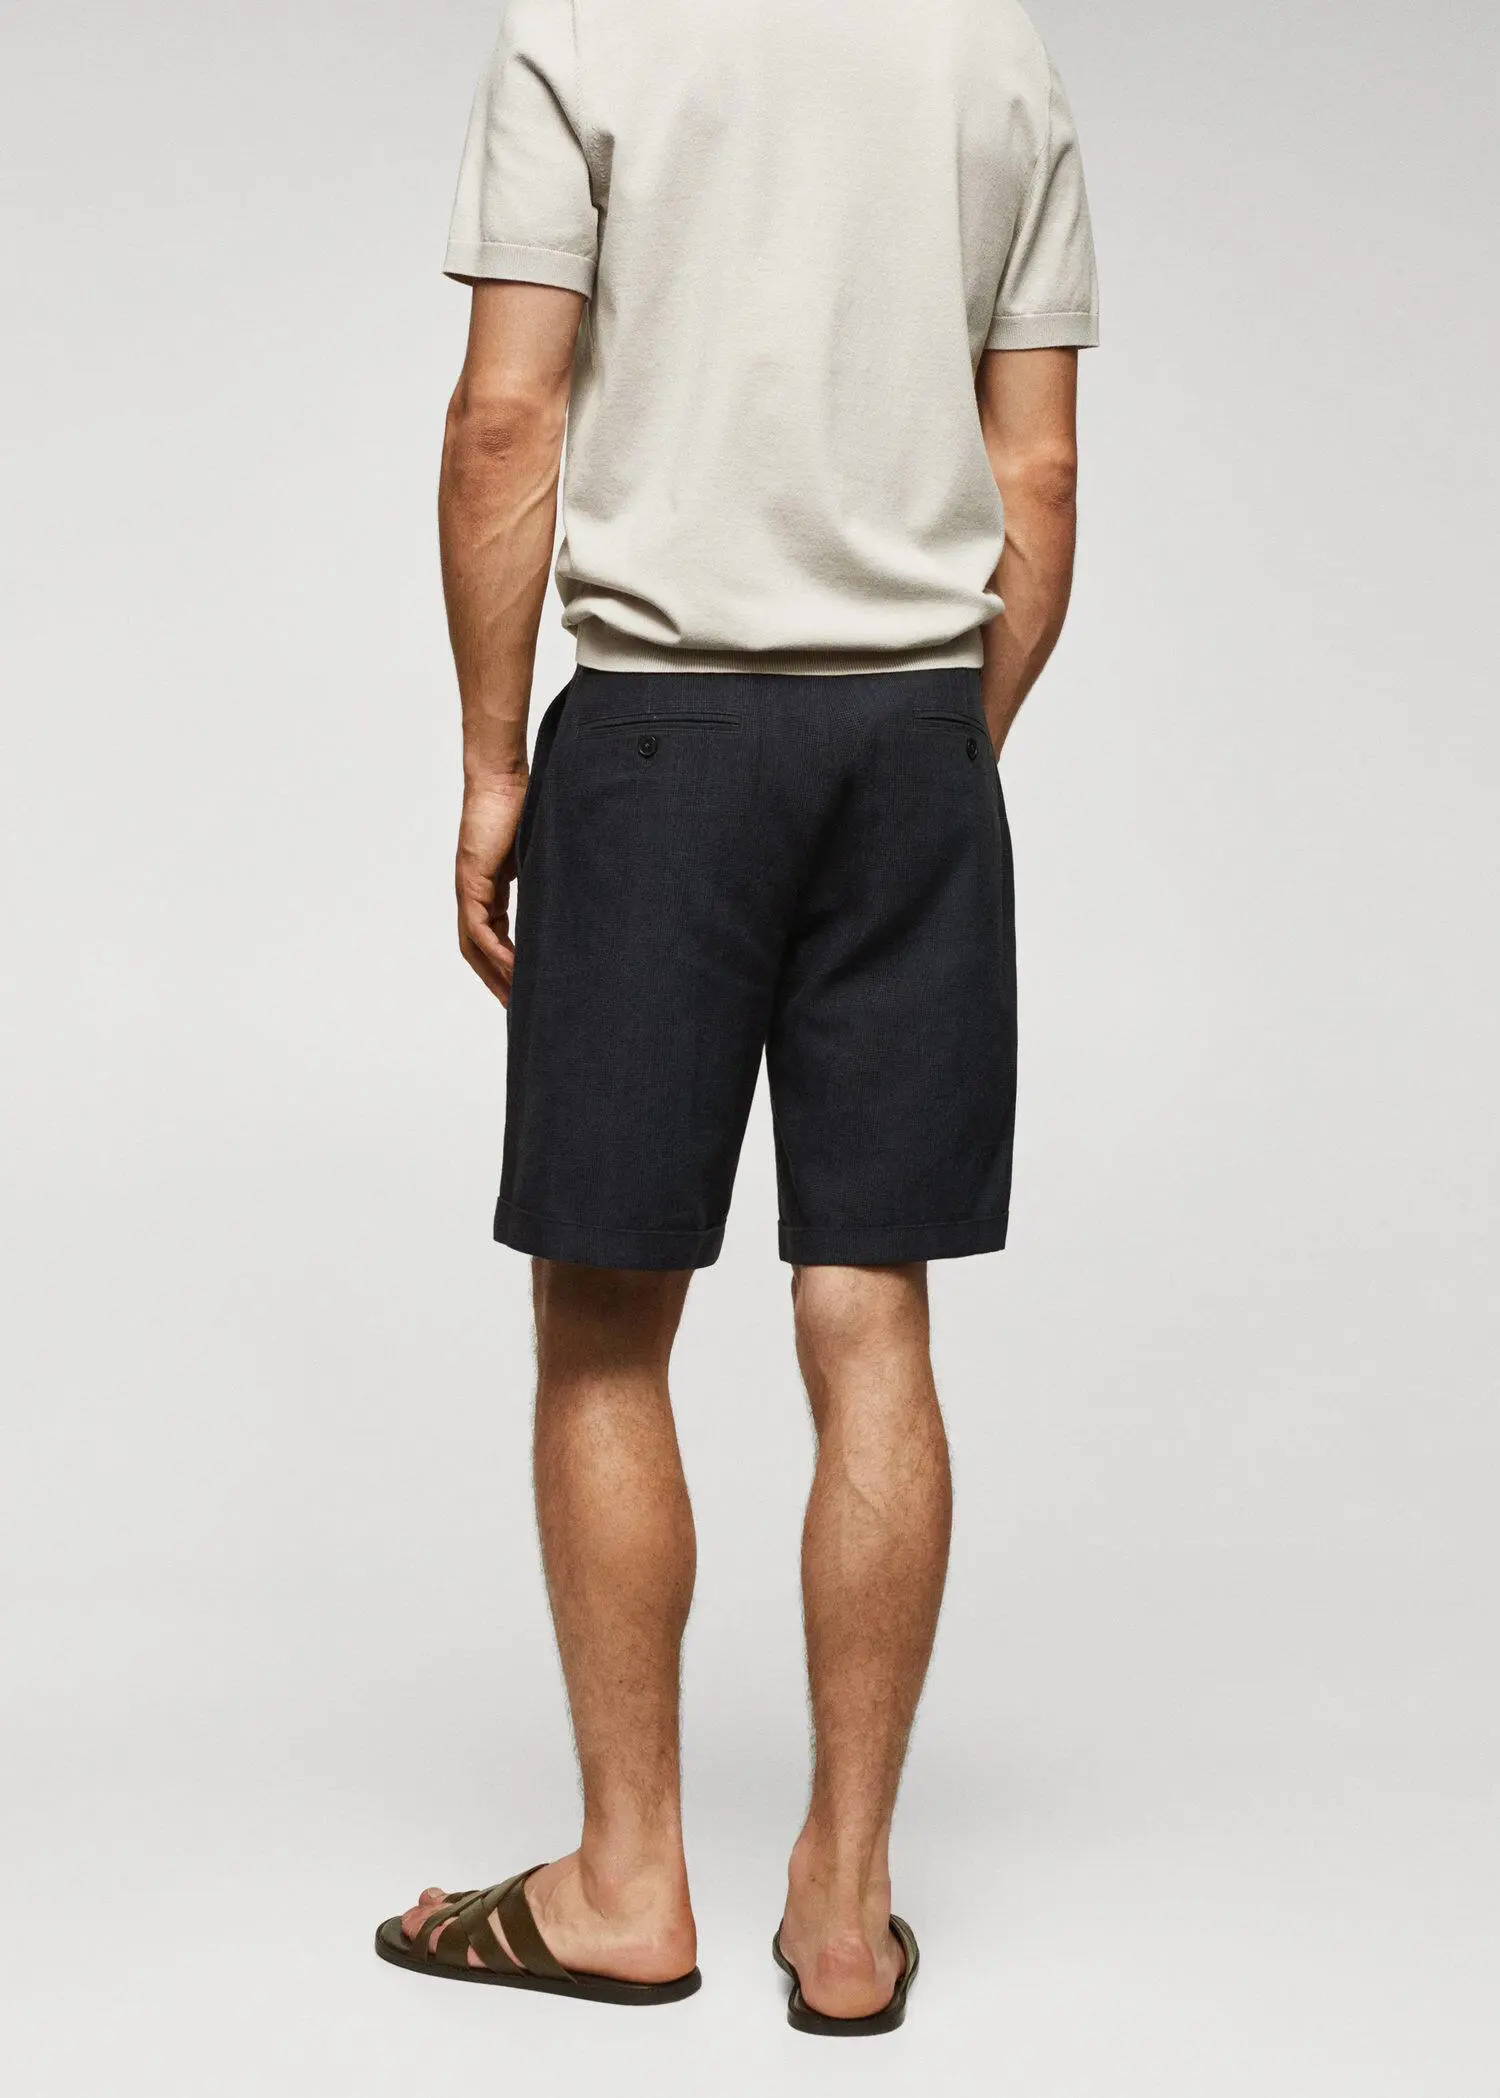 Mango Bermuda-Shorts aus Baumwoll-Leinen mit Prince-of-Wales-Check-Muster. 3